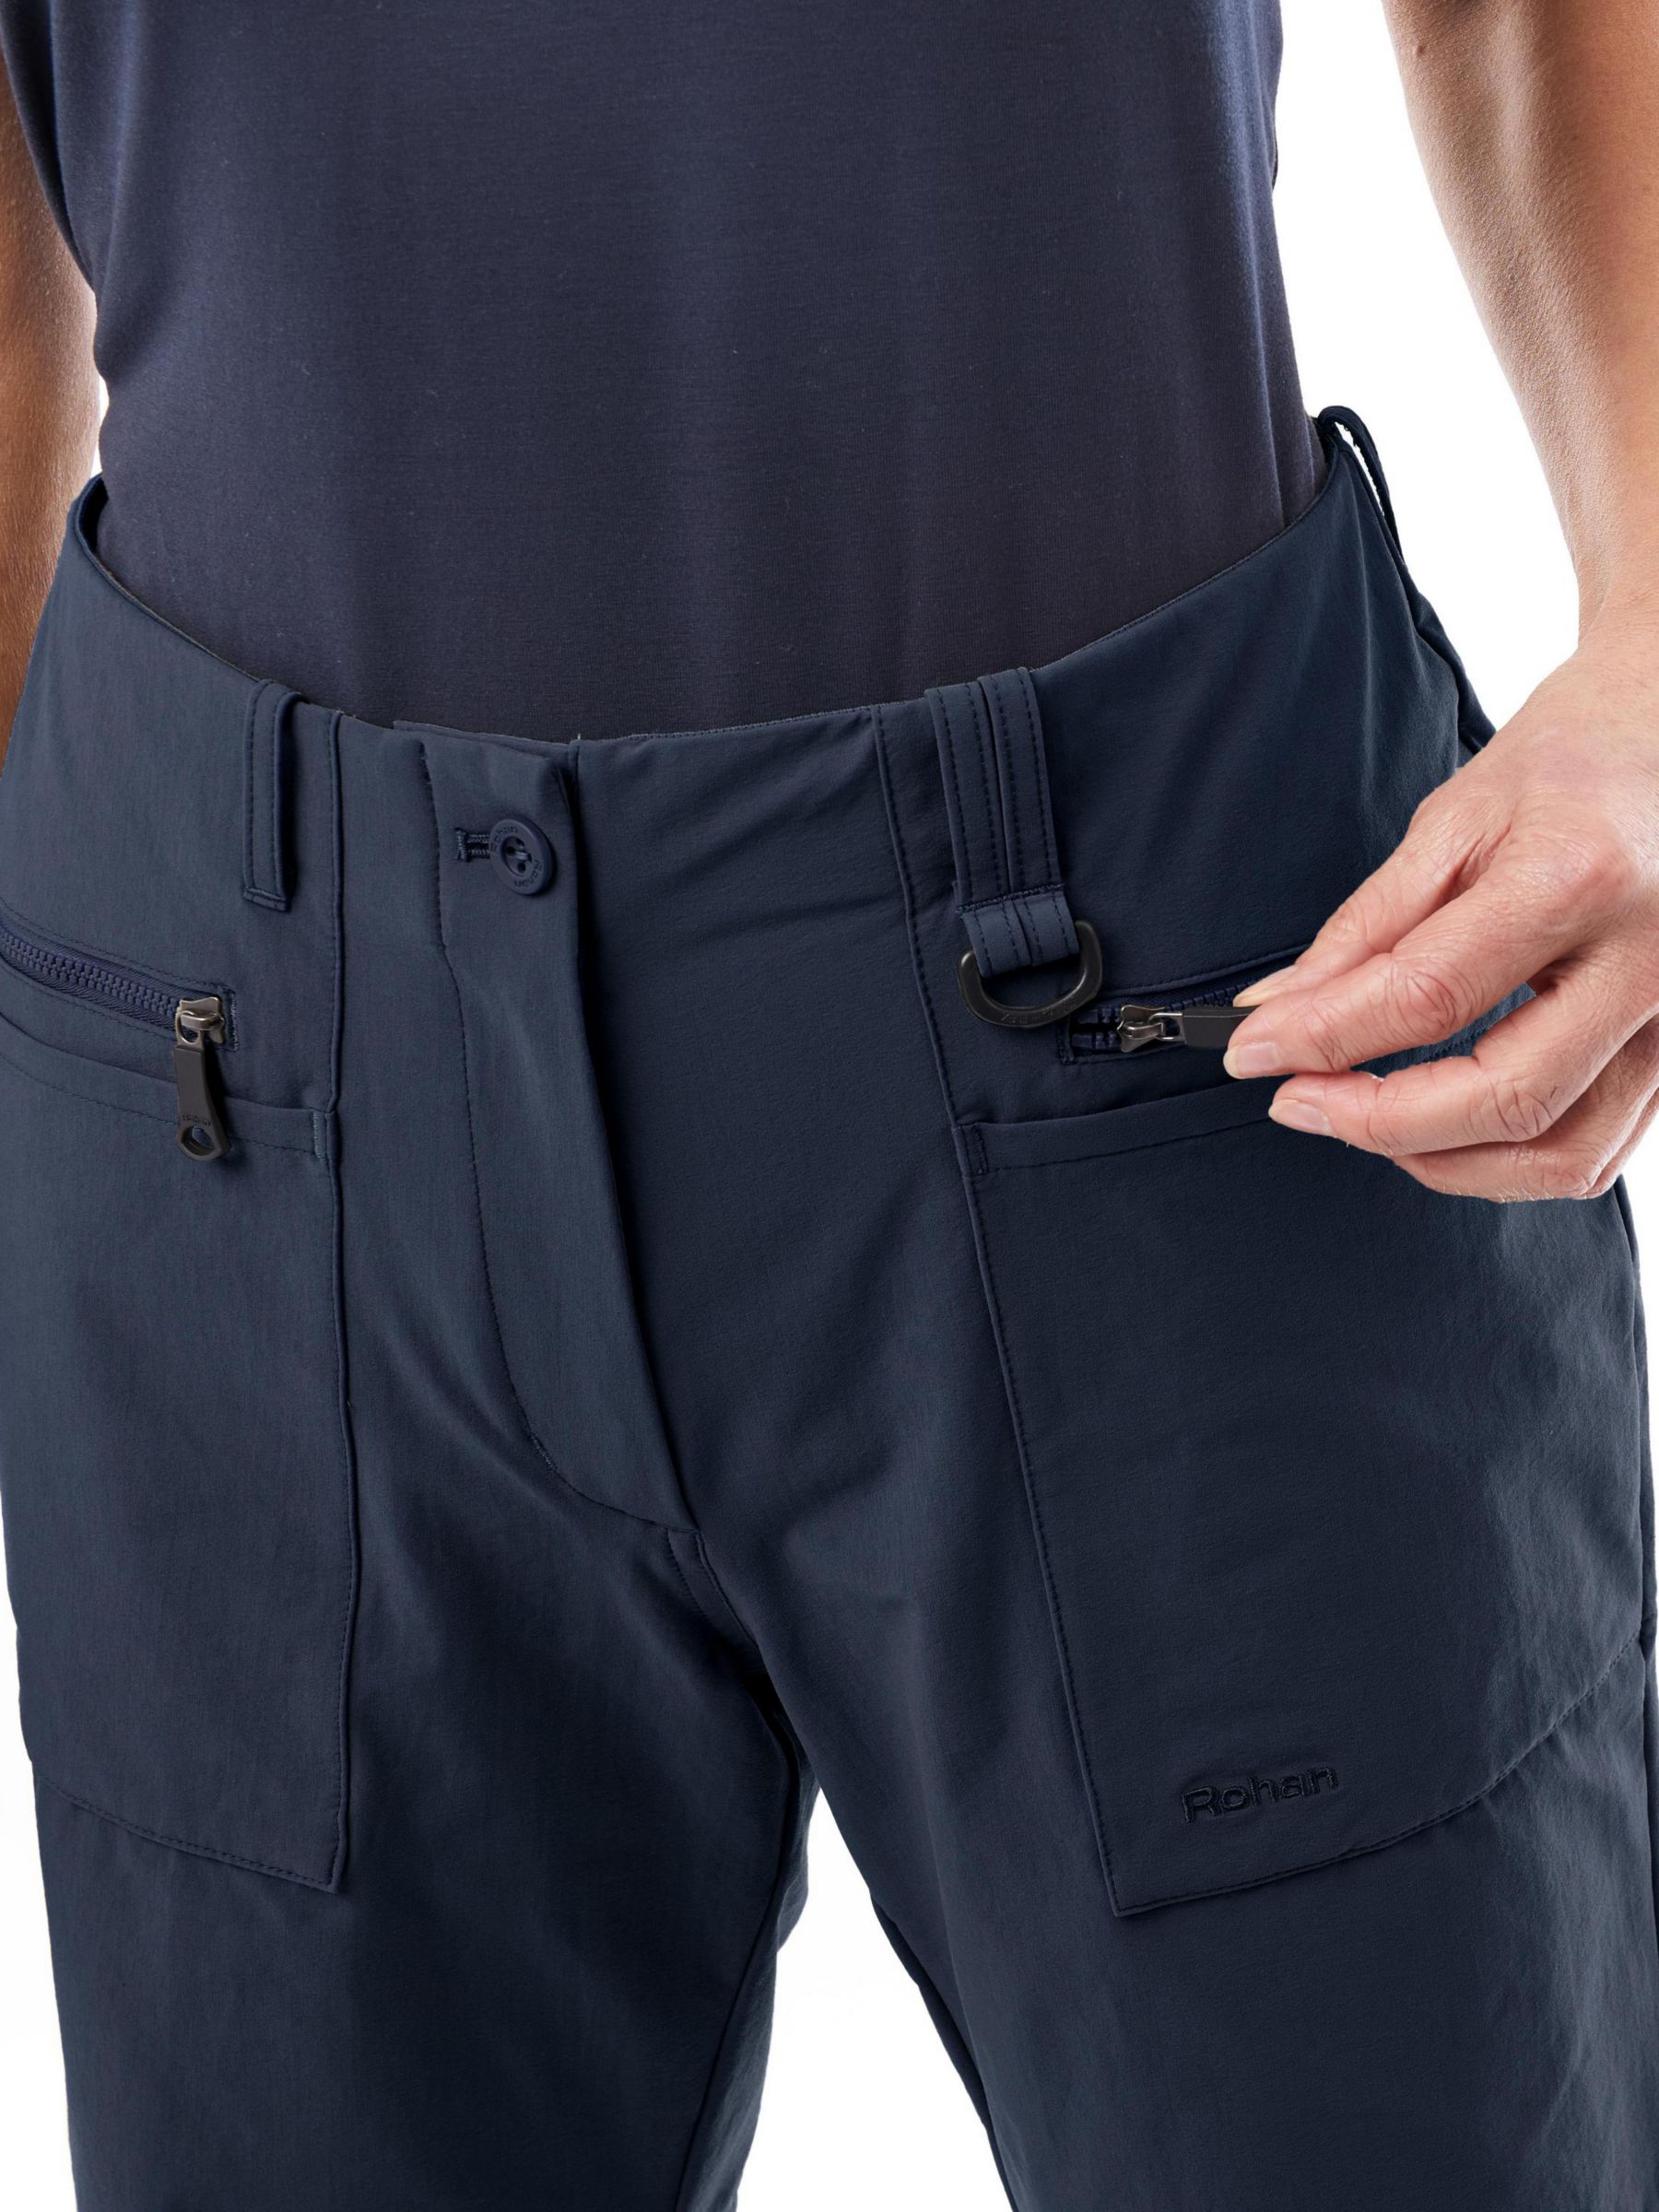 Buy Rohan Stretch Bag Hiking Shorts Online at johnlewis.com